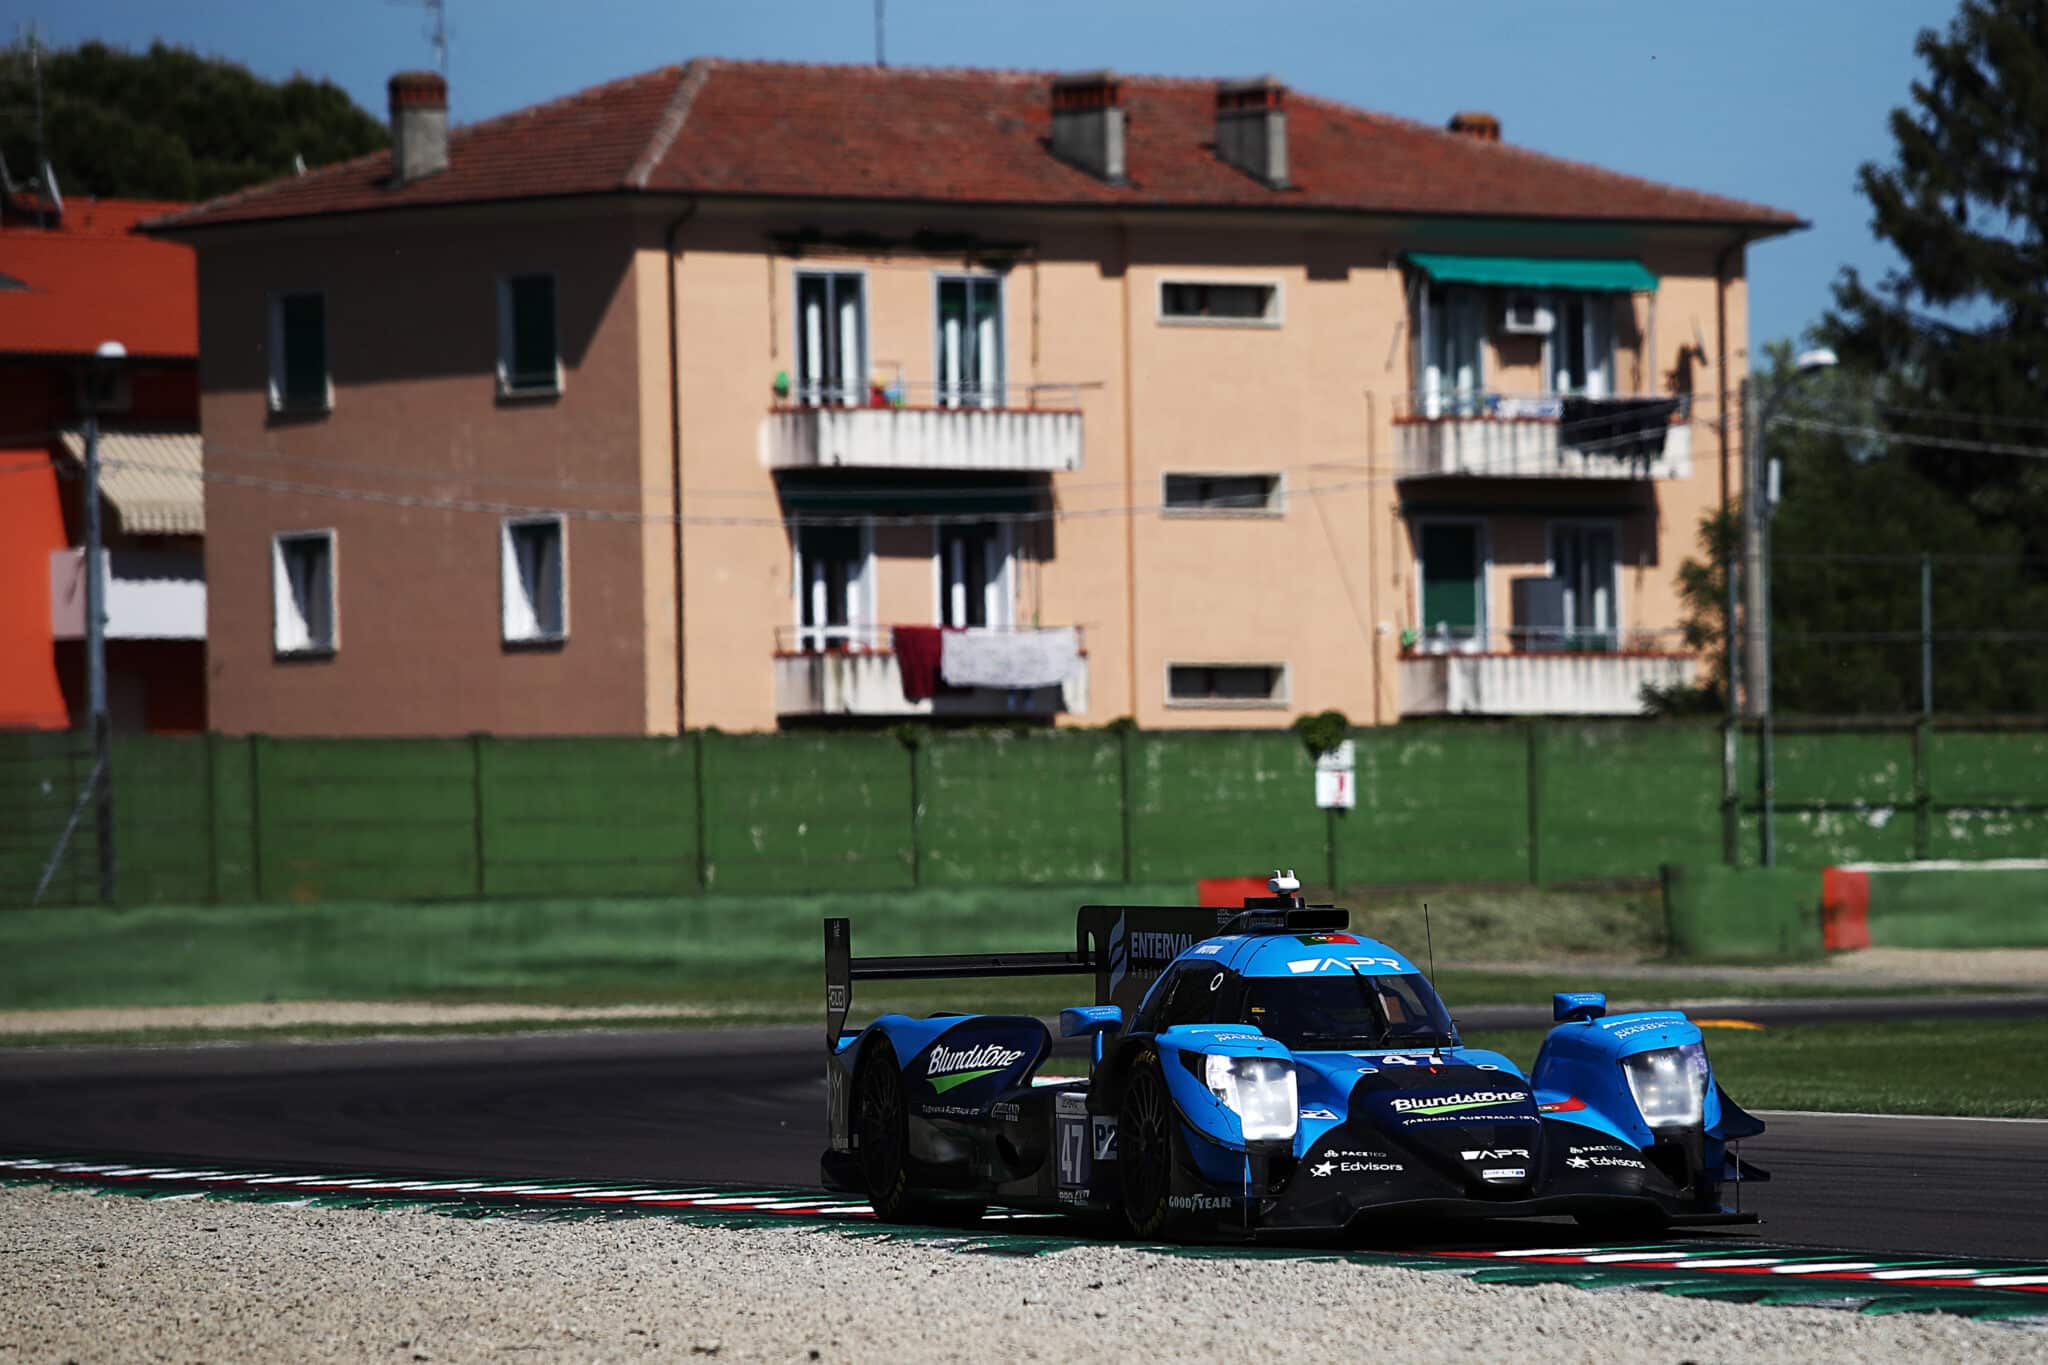 a blue race car driving down a race track